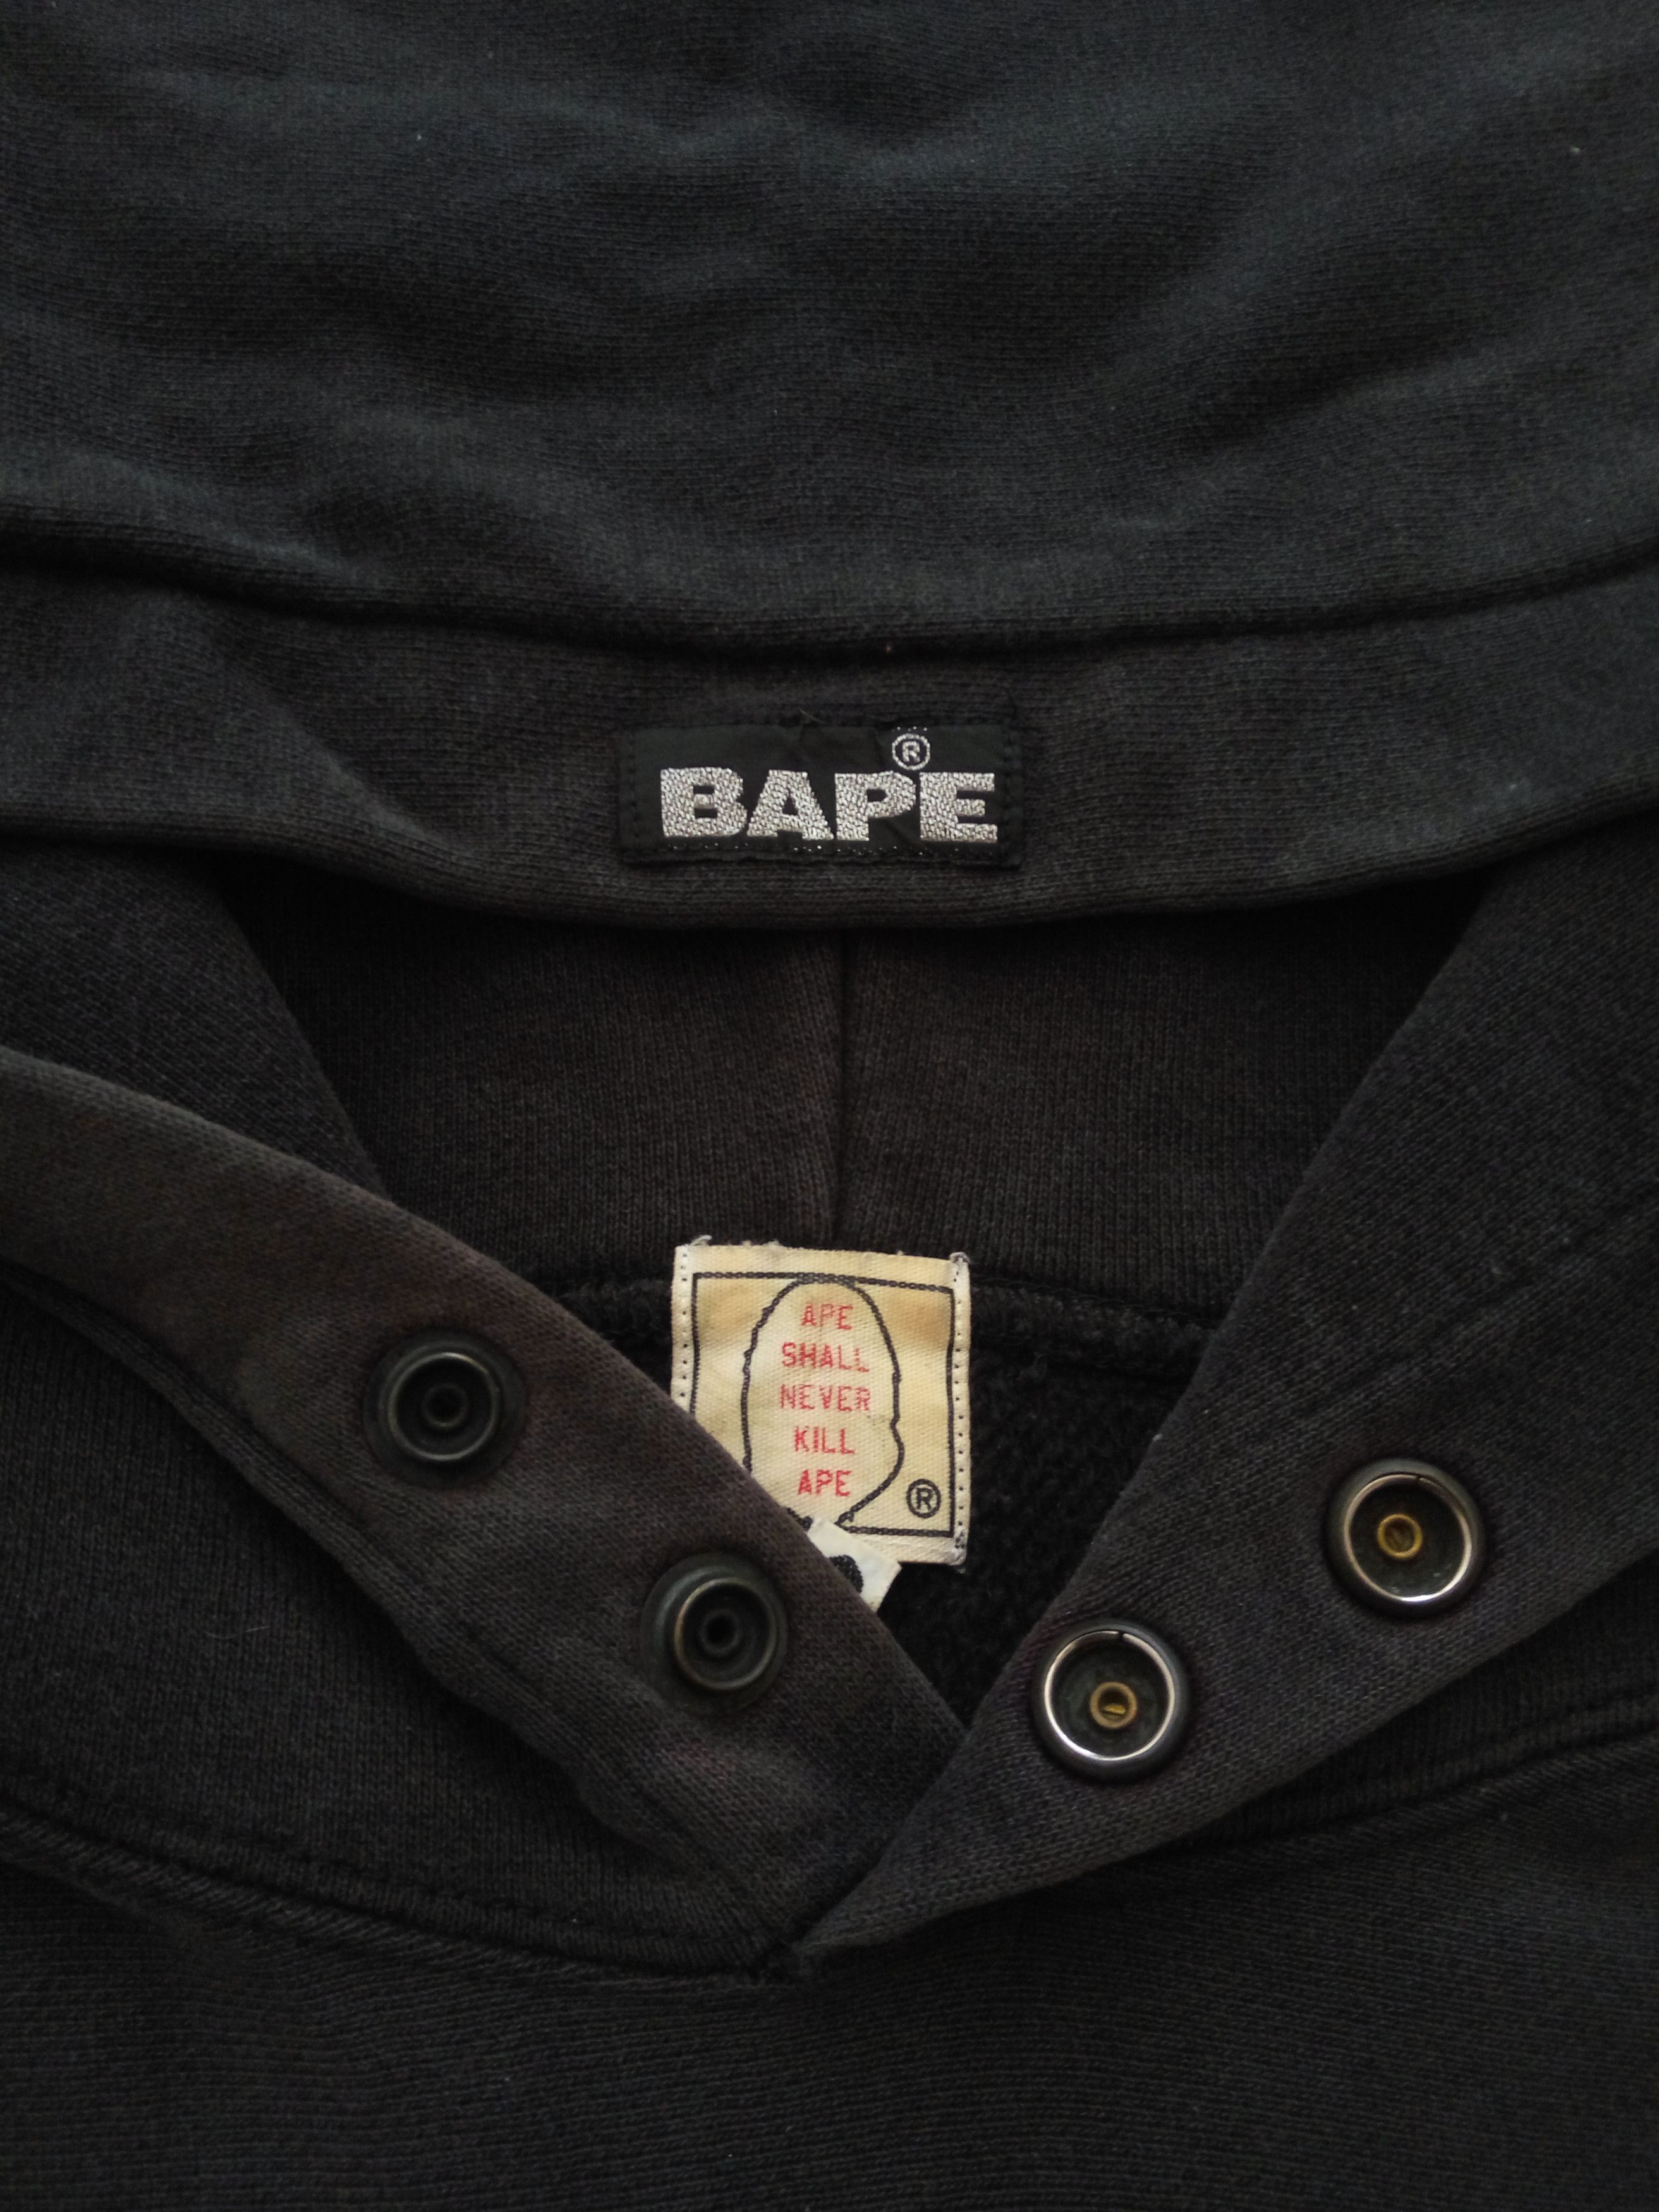 Bape Bape Cash Money Record Logo Hoodie sz medium TTS Size US M / EU 48-50 / 2 - 3 Thumbnail